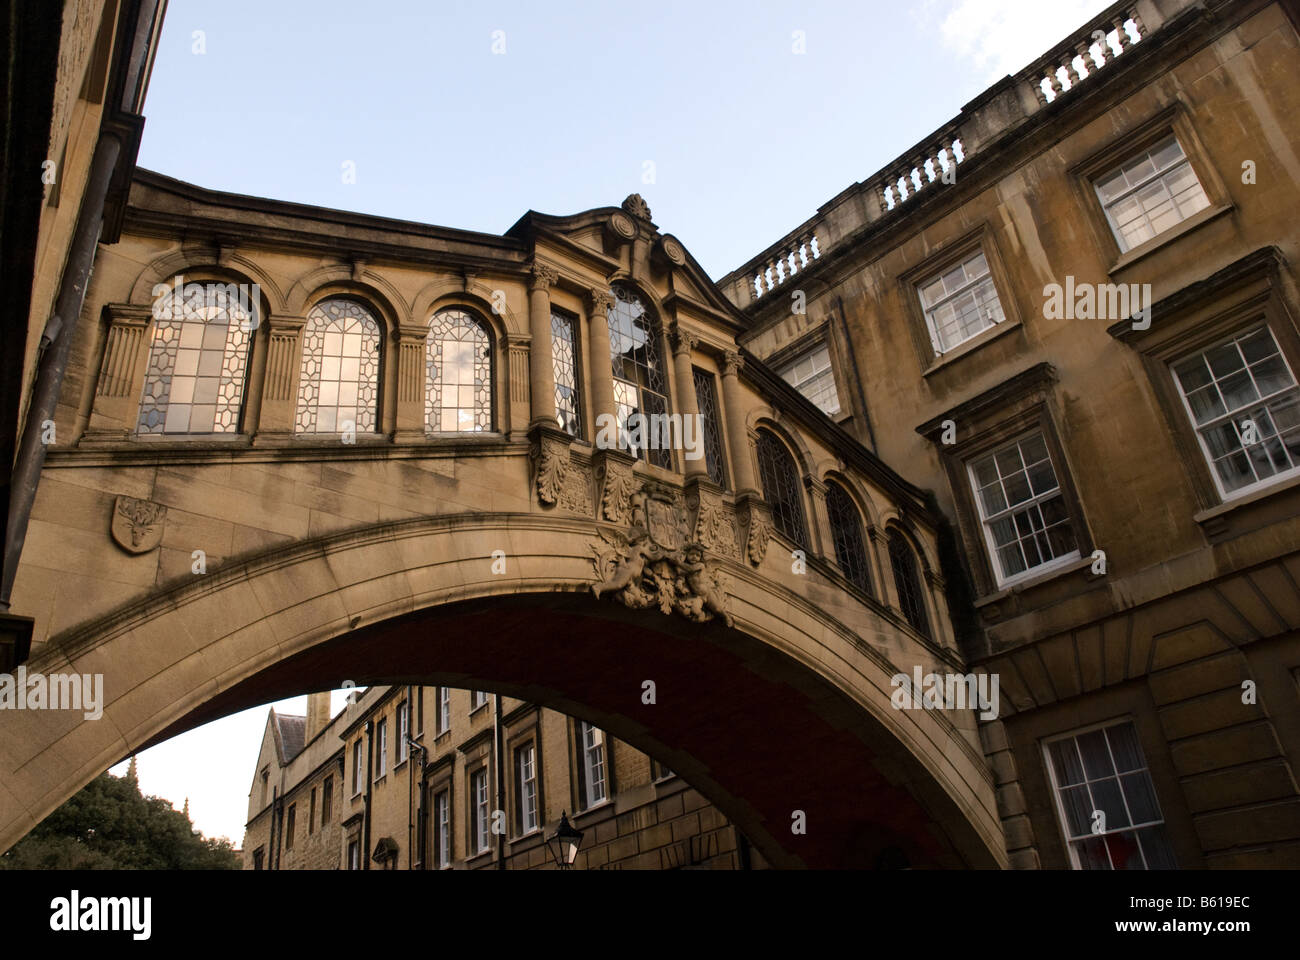 The Bridge of Sighs, Oxford Stock Photo